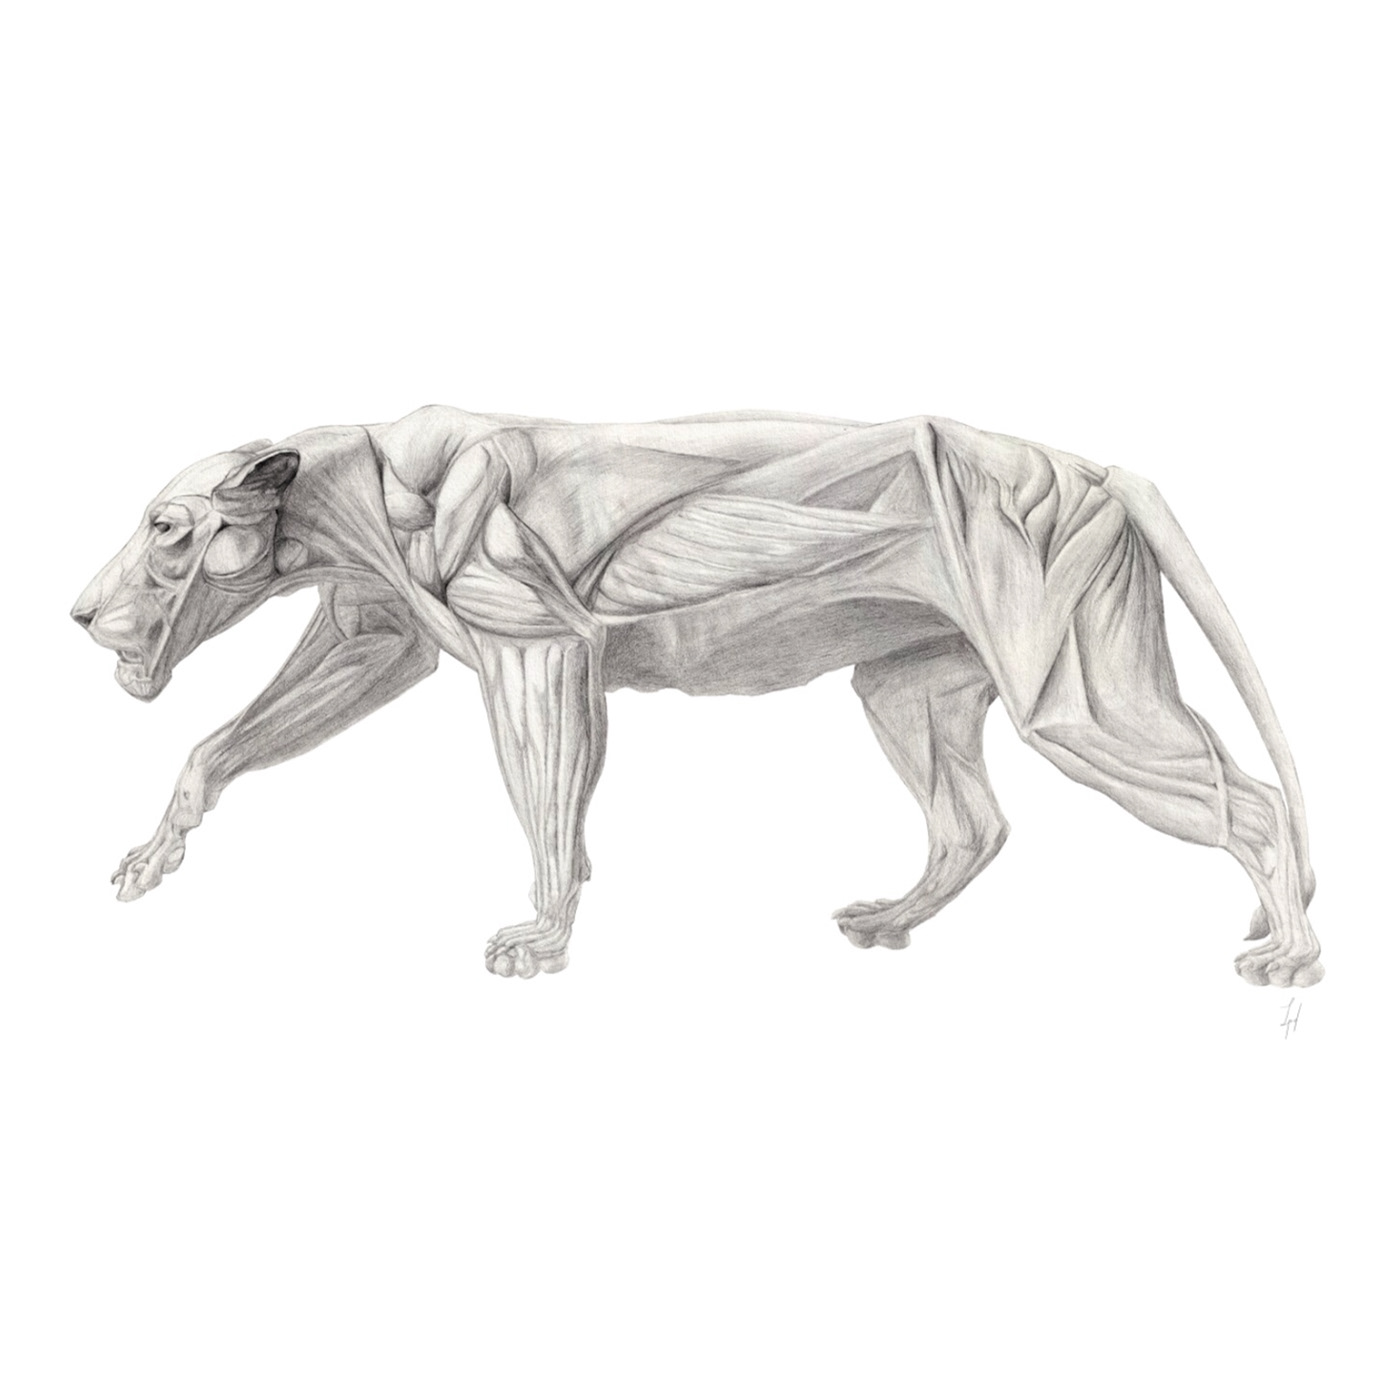 anatomical illustration animal illustration graphite lion scientific illustration